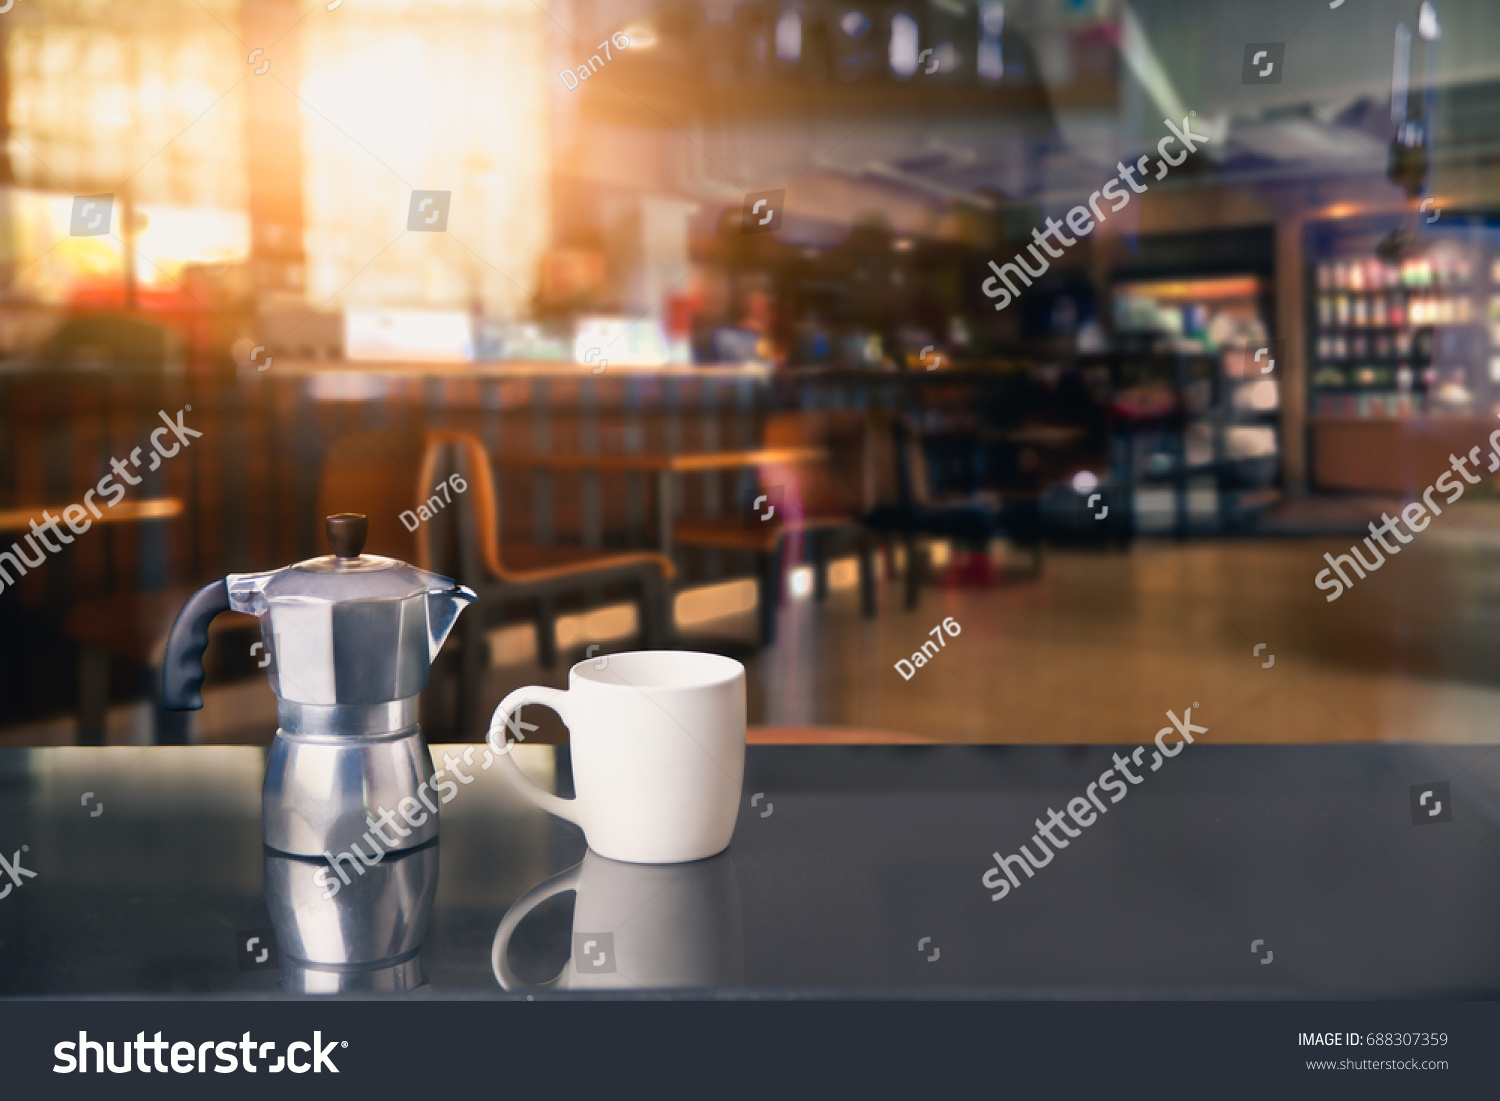 Coffee Cup Espresso Maker Pot On Stock Photo 688307359 Shutterstock